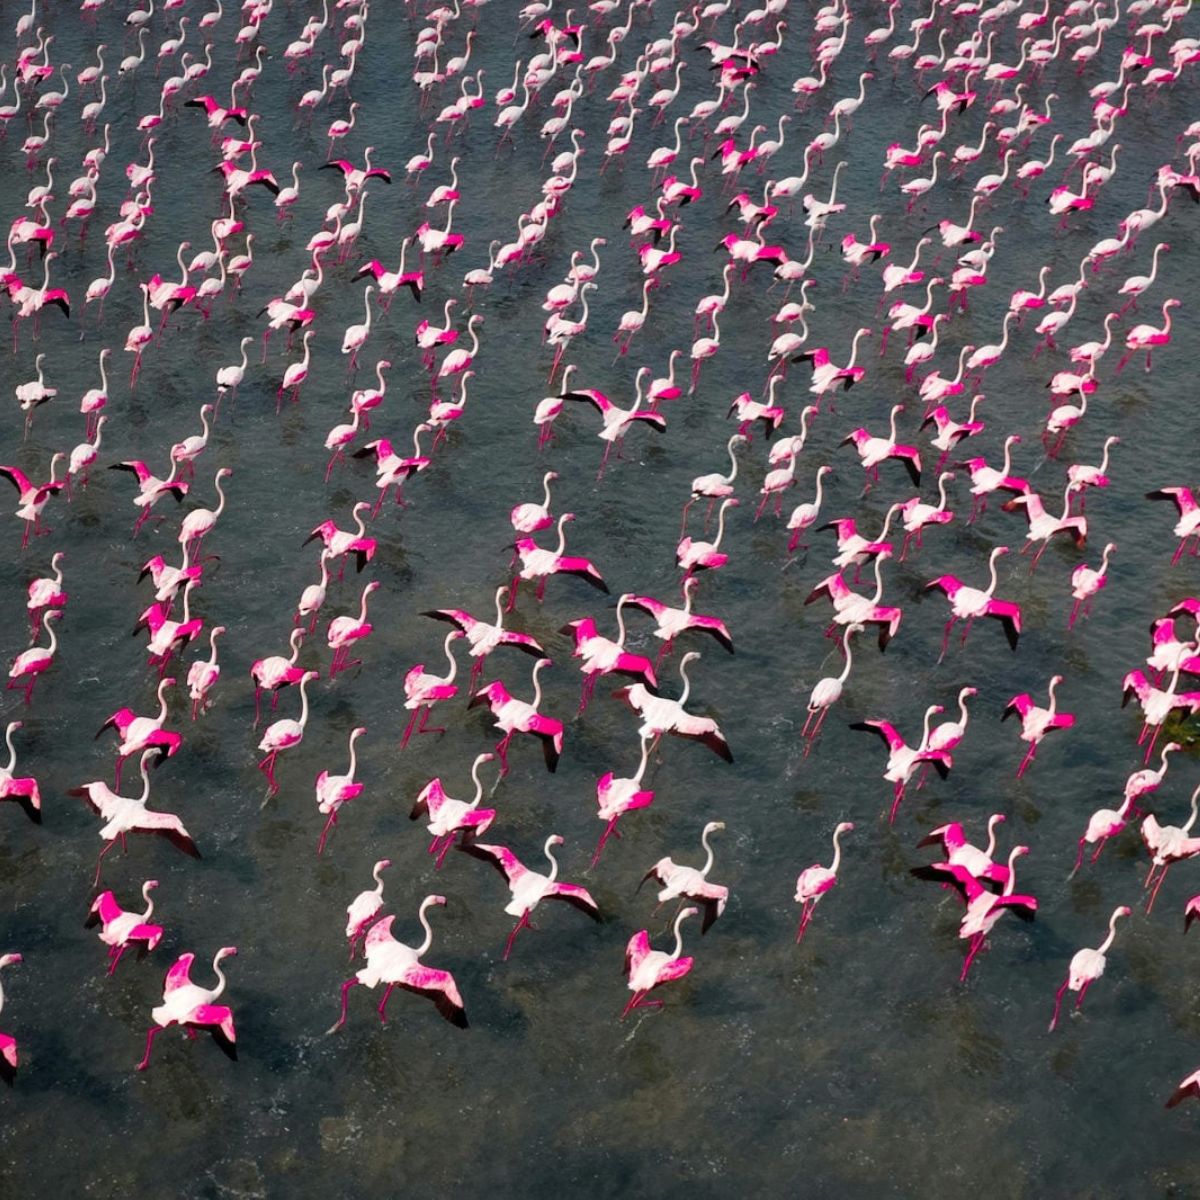 raj-mohan-pictures-flamingo-migration-in-indias-pulicat-lake-featured